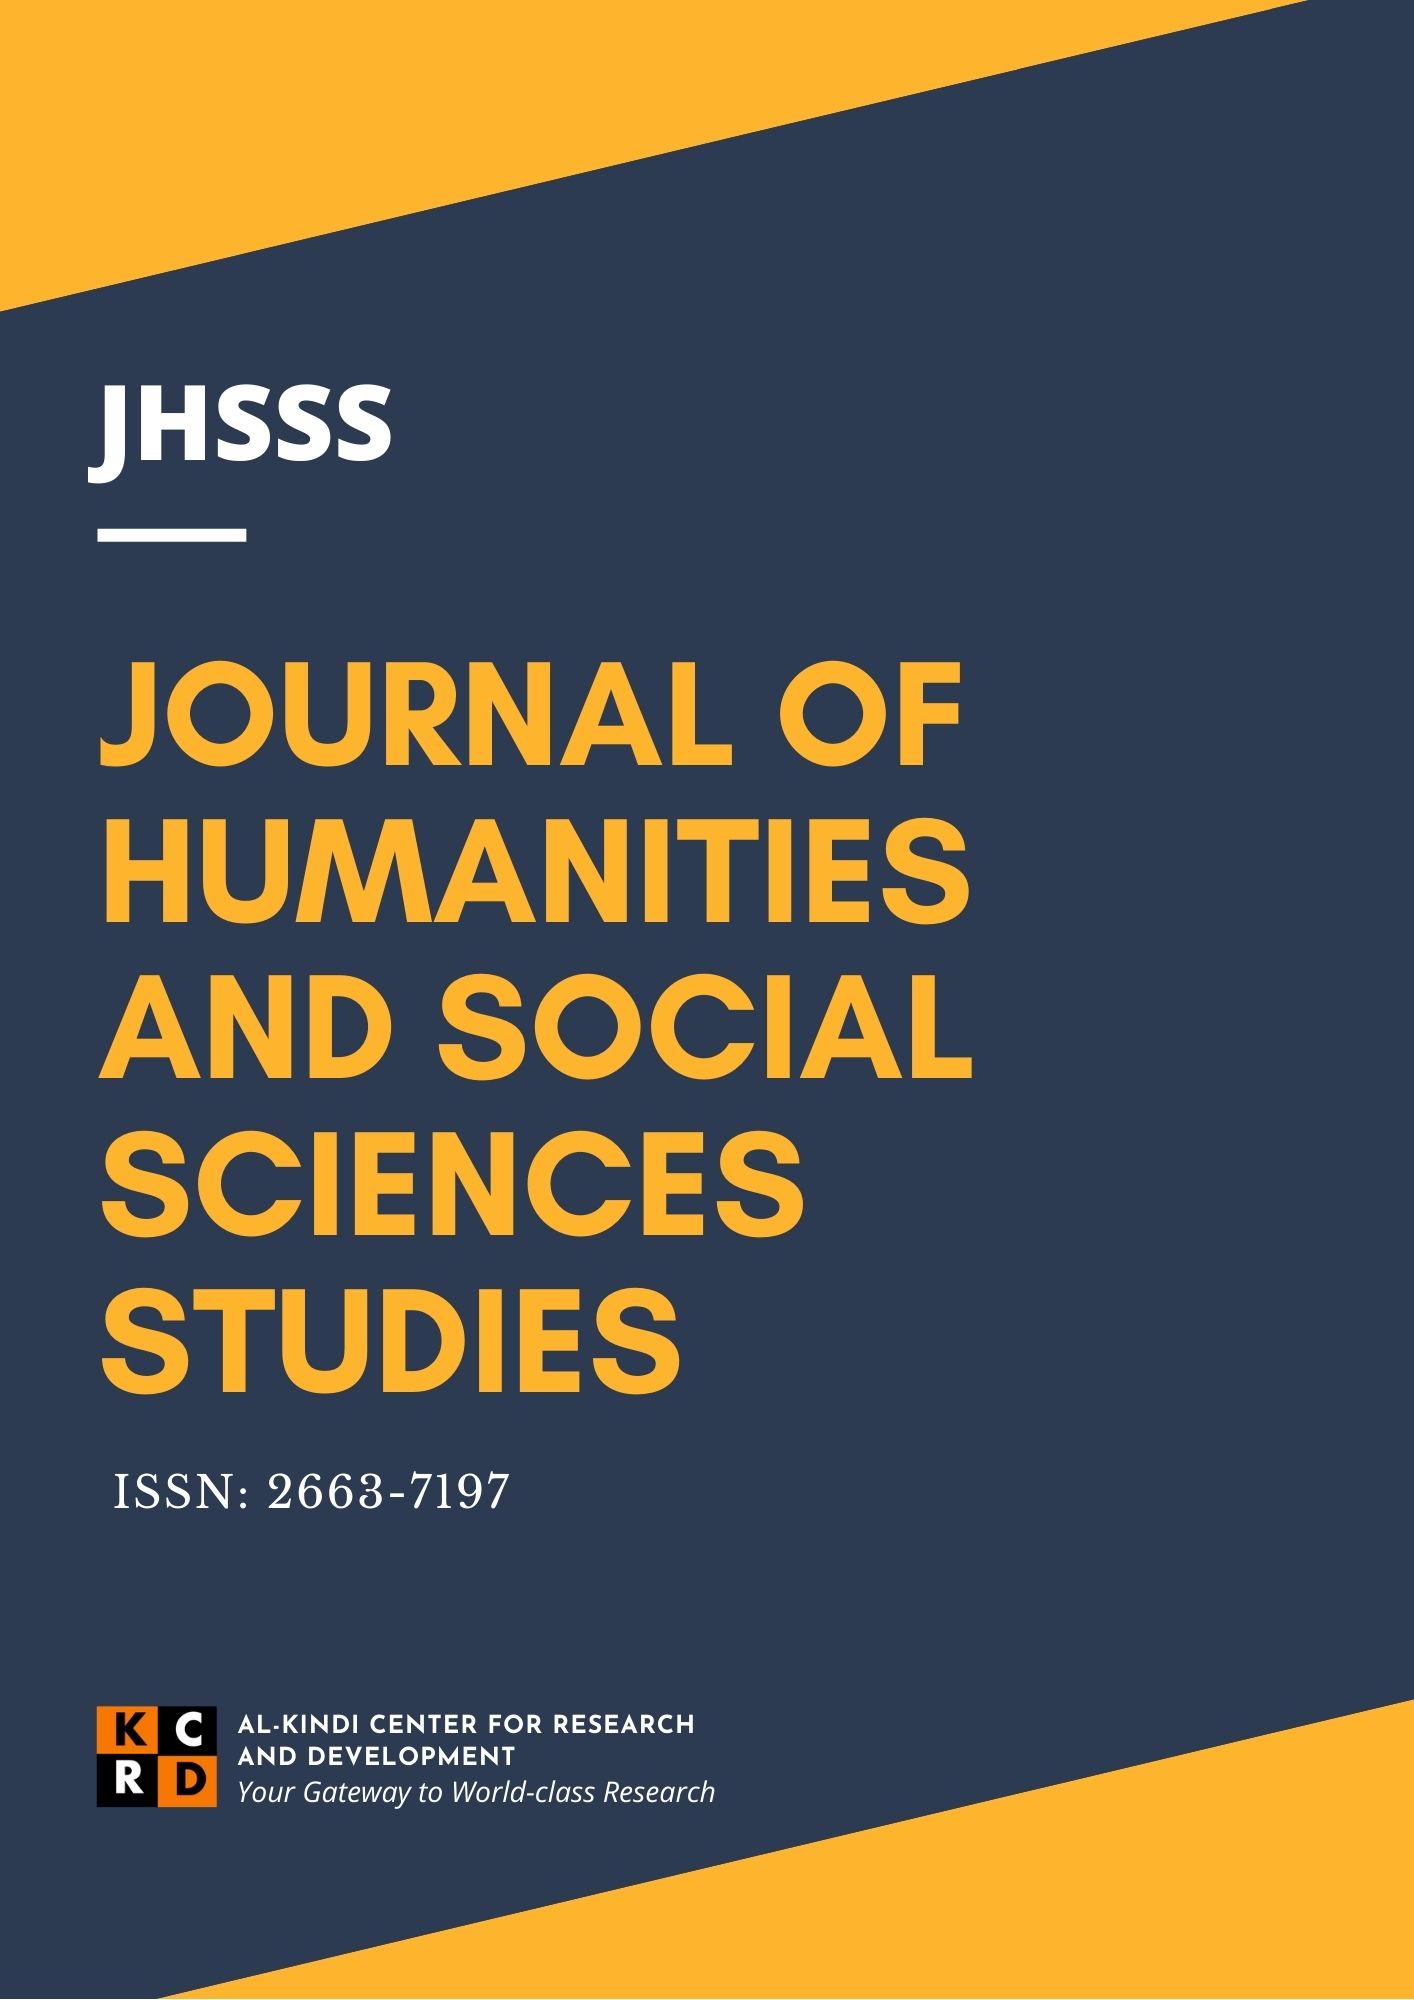 Journal of Humanities and Social Sciences Studies